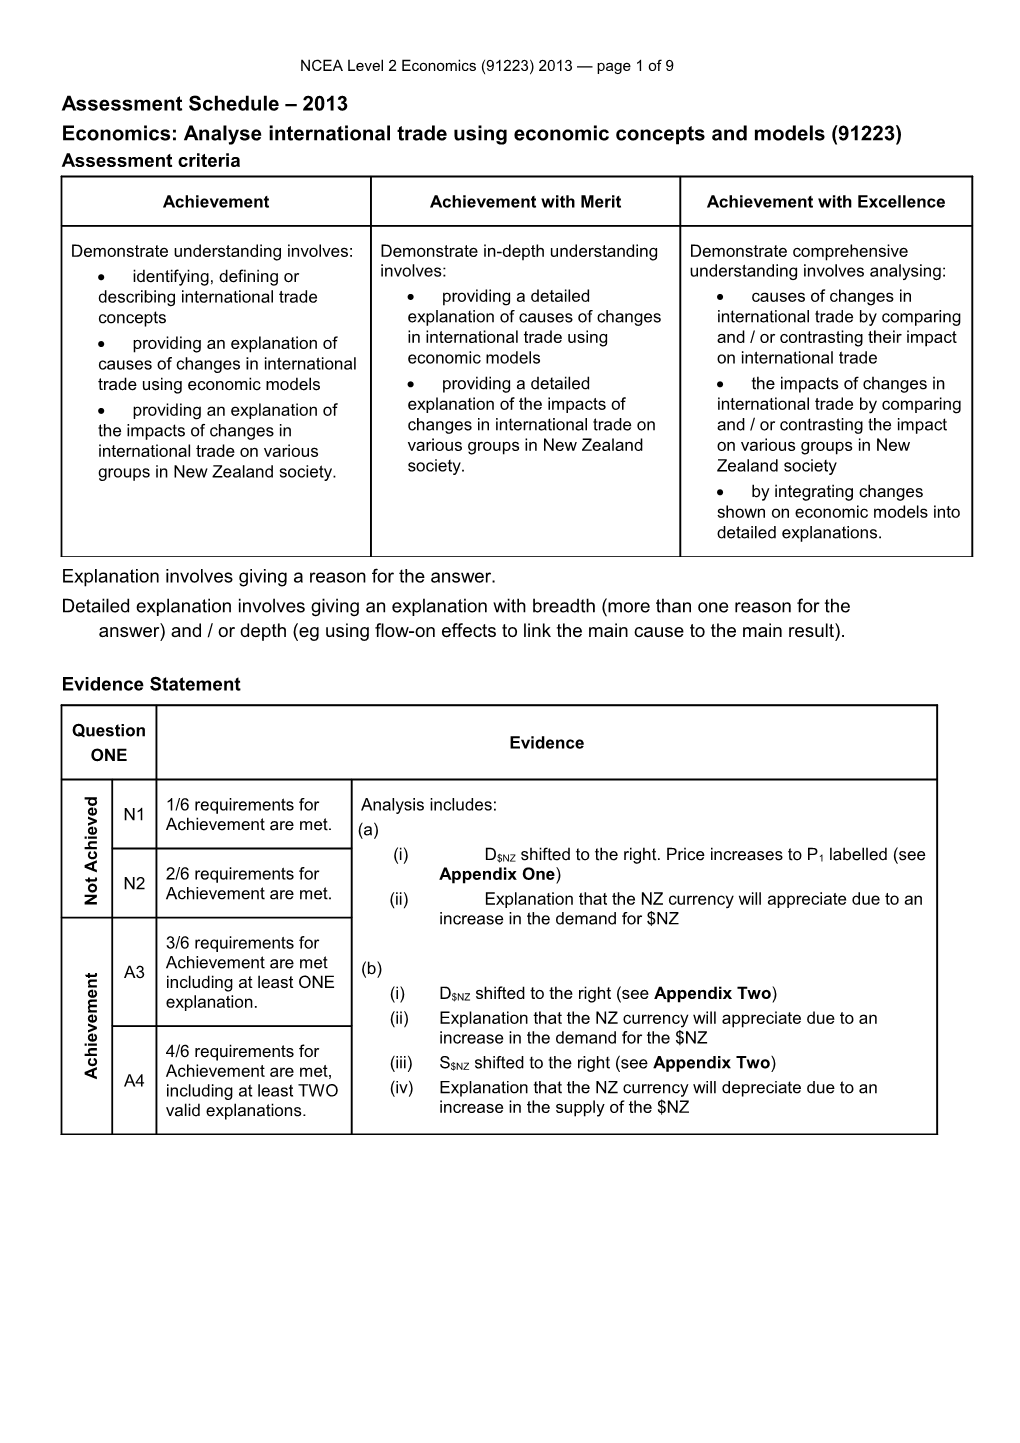 NCEA Level 2 Economics (91223) 2013 Assessment Schedule